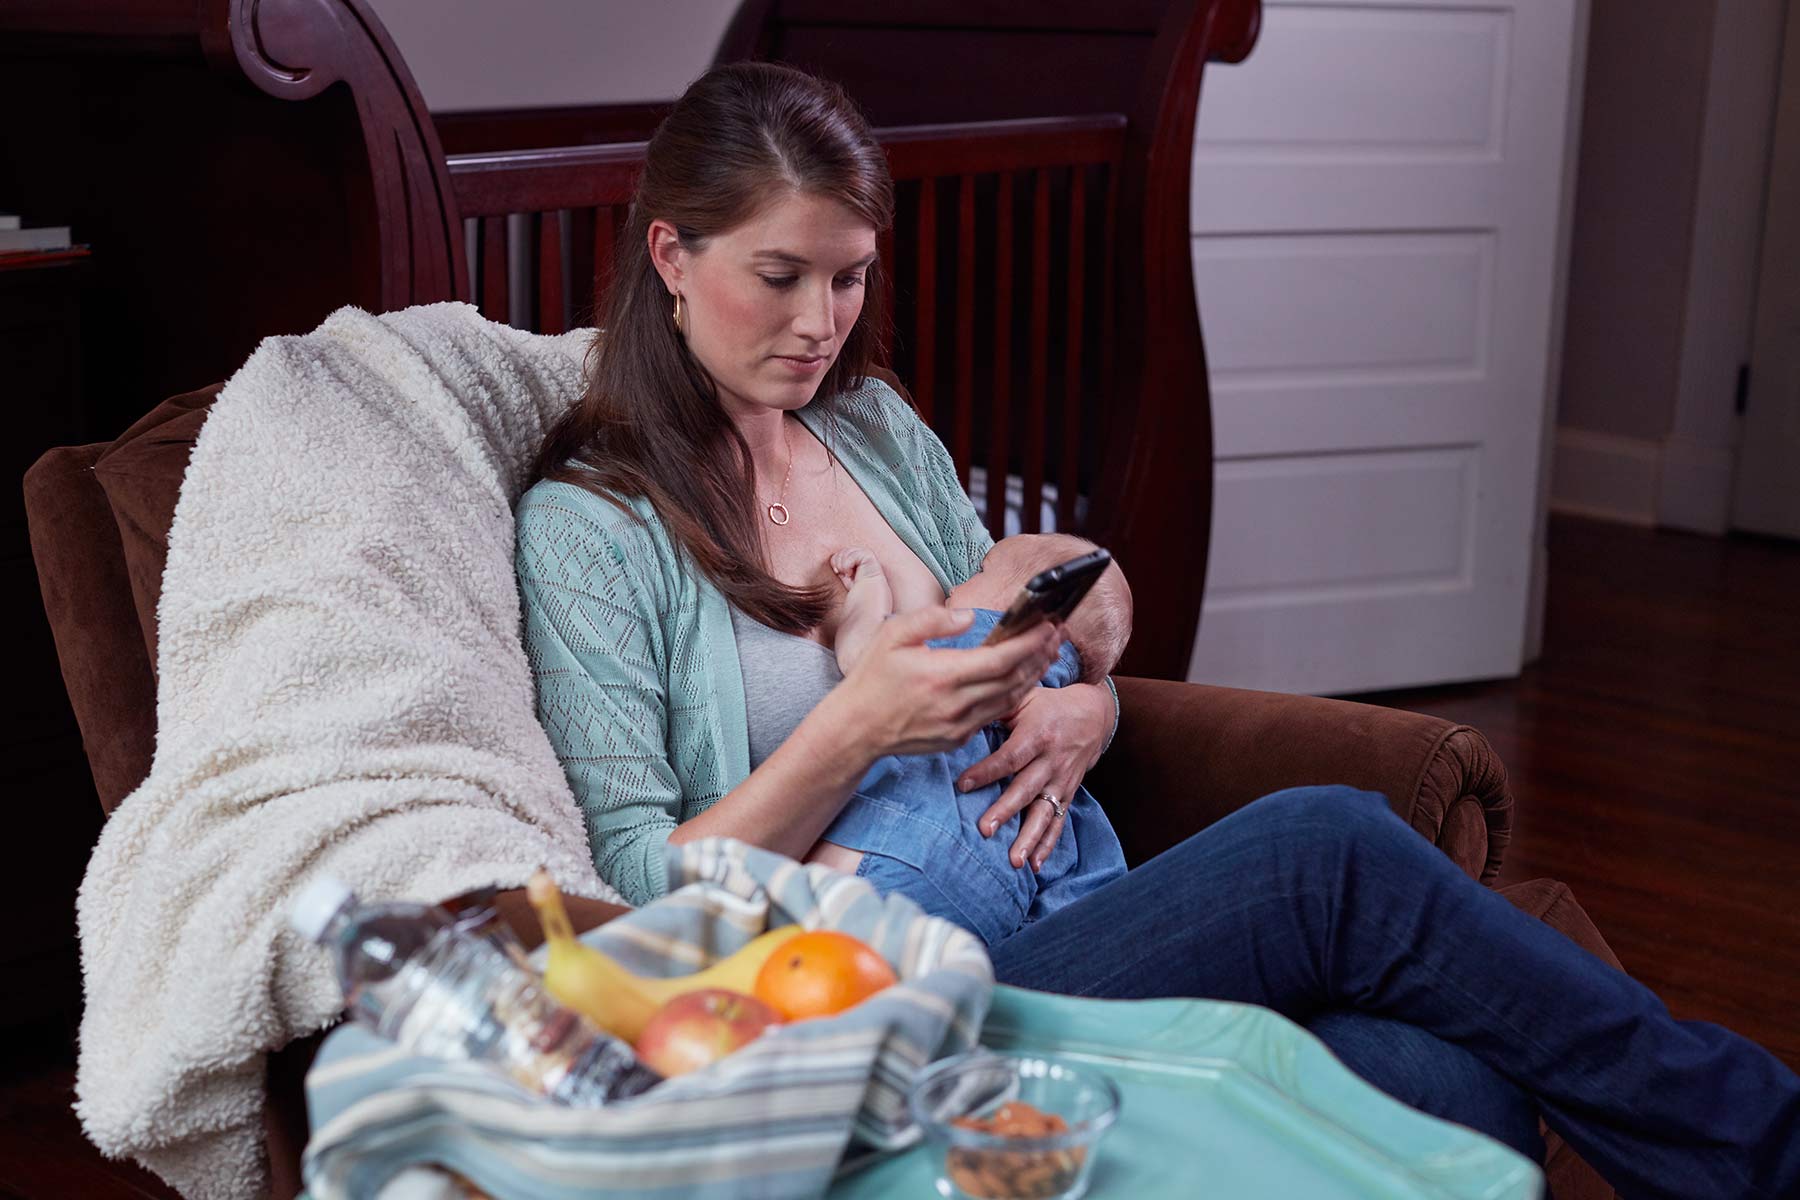 Mom breastfeeding infant while on phone